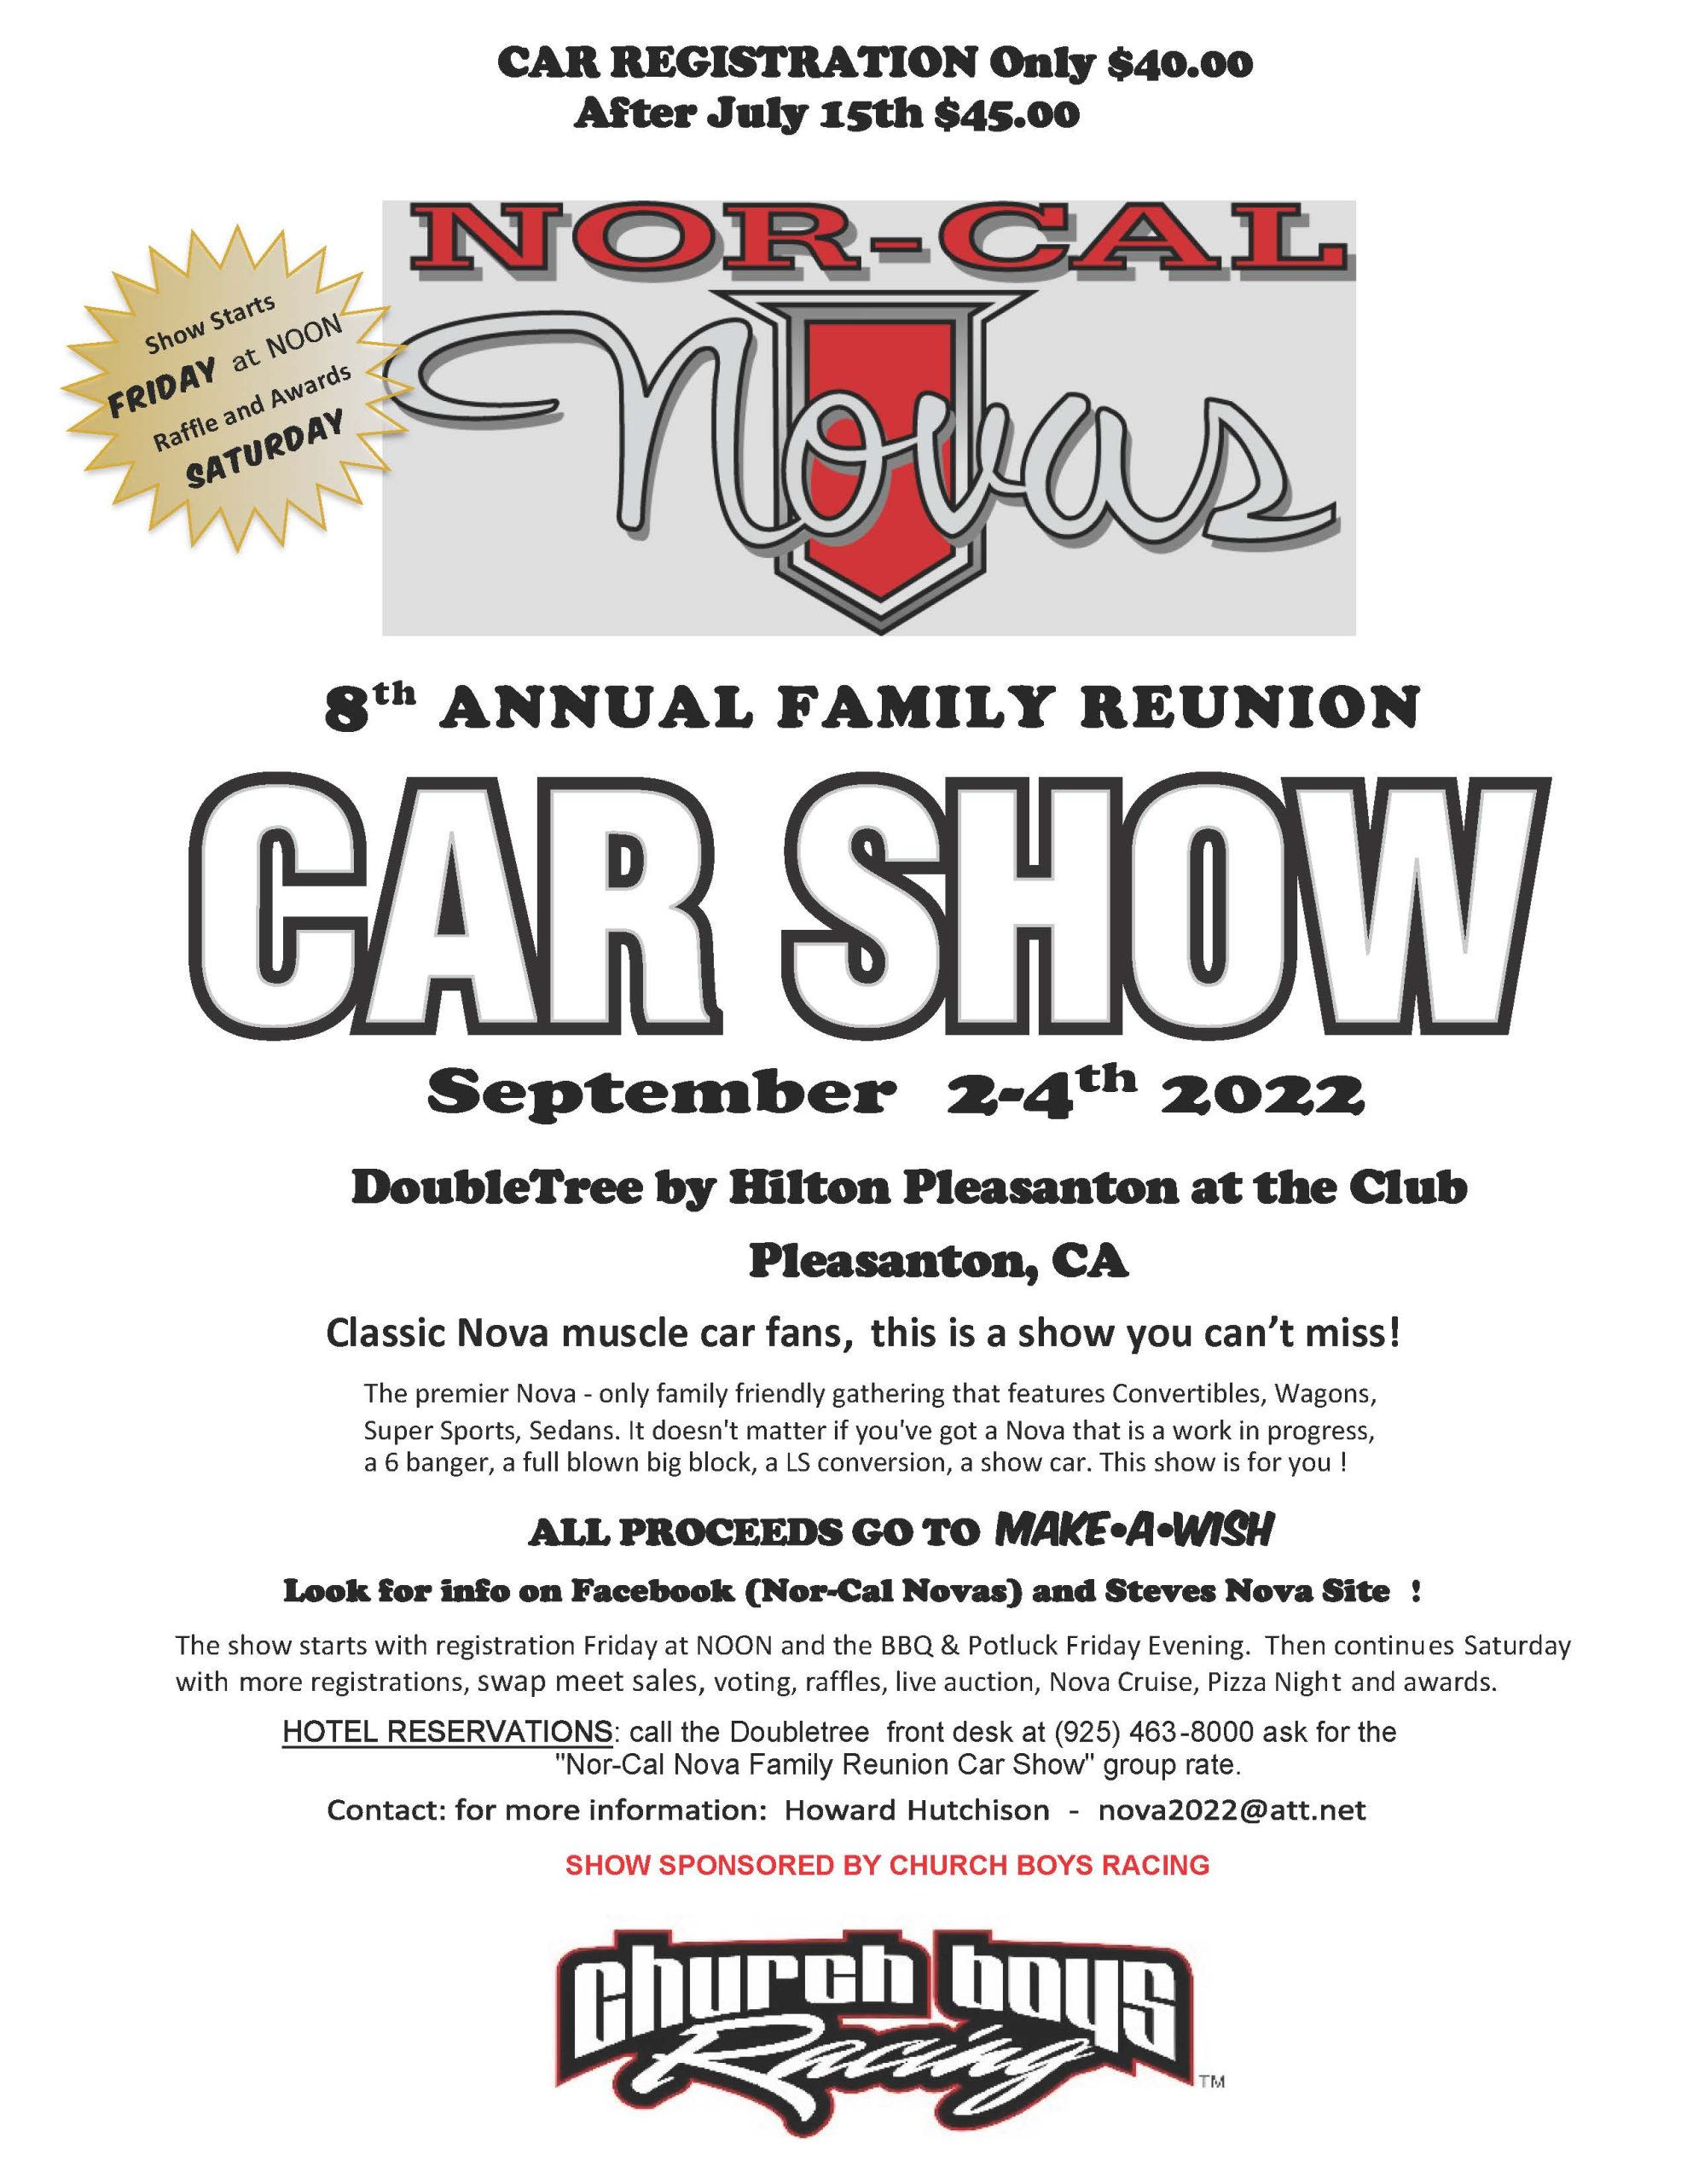 NorCal Novas Family Reunion Car Show